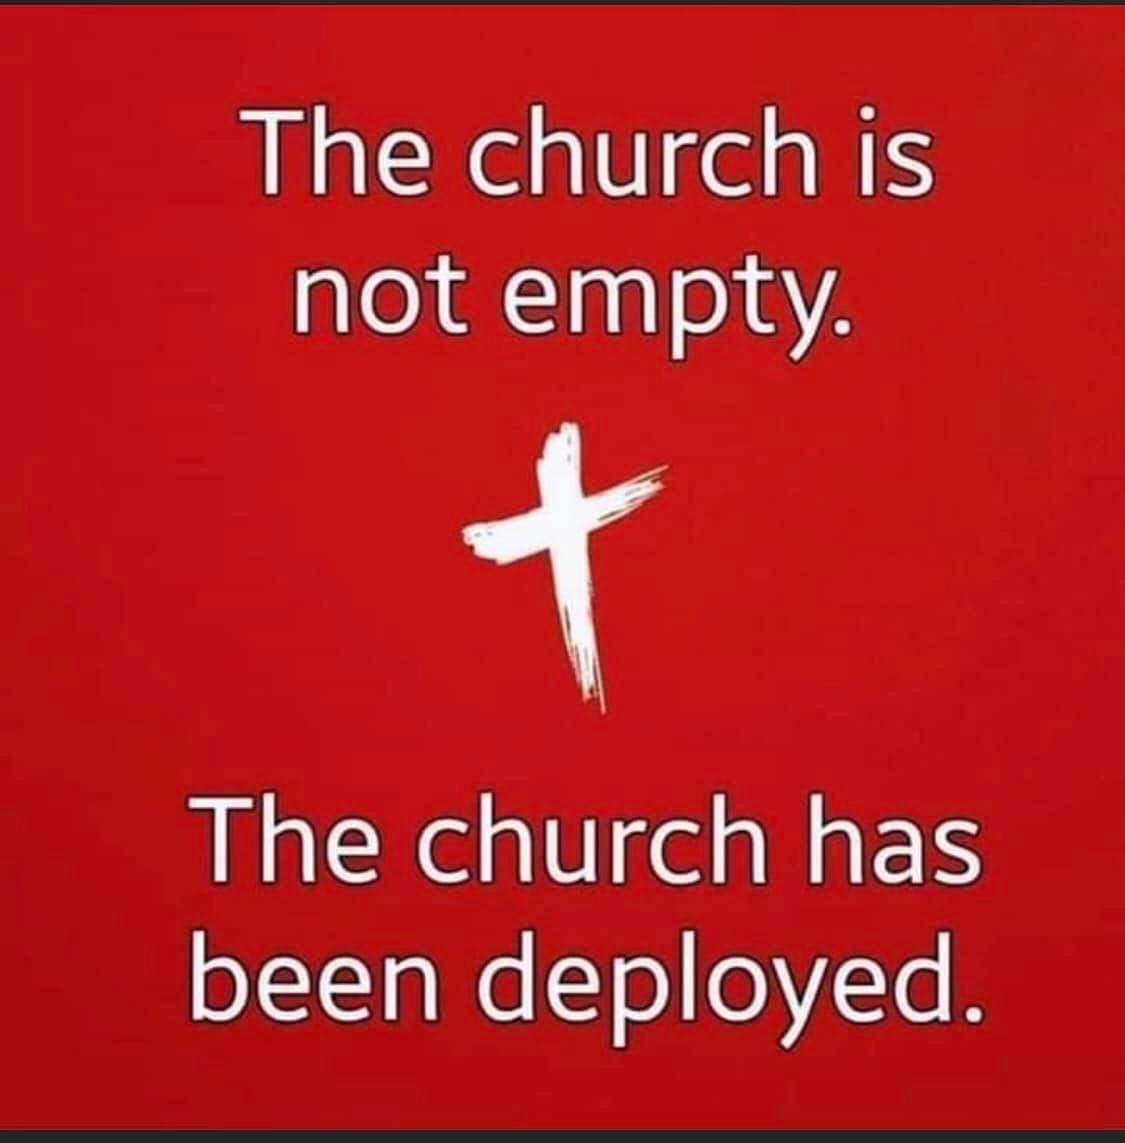 Church is deployed